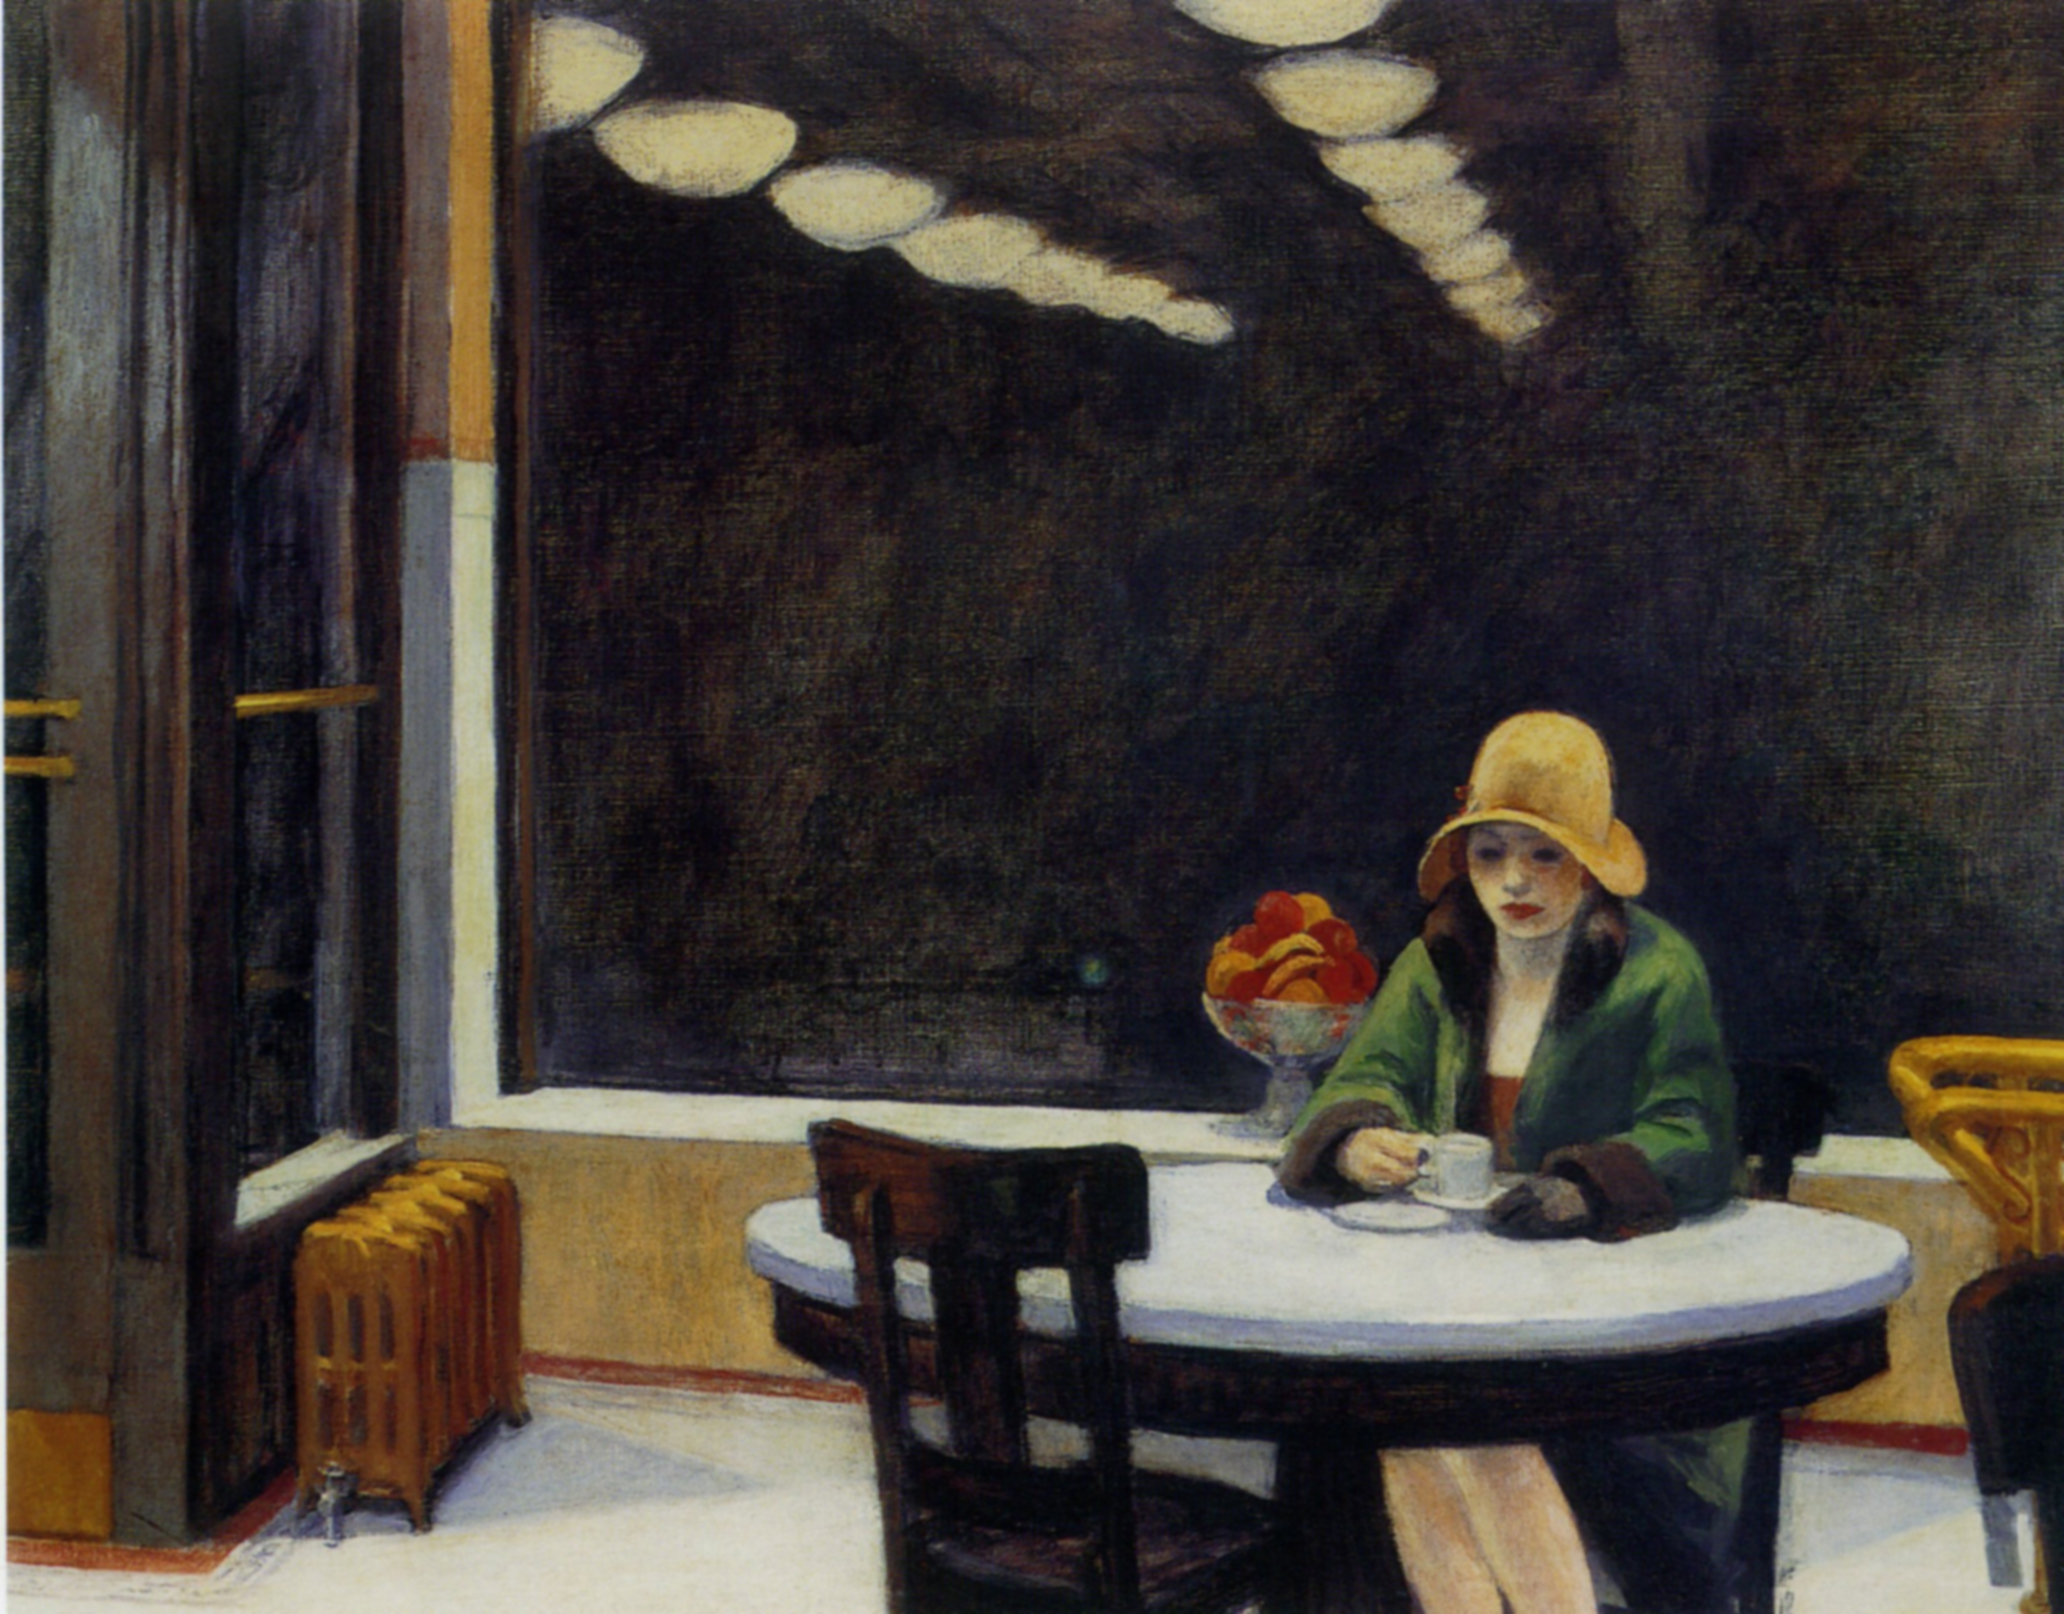 Automat by Edward Hopper - 1927 - 71,4 cm × 91,4 cm 